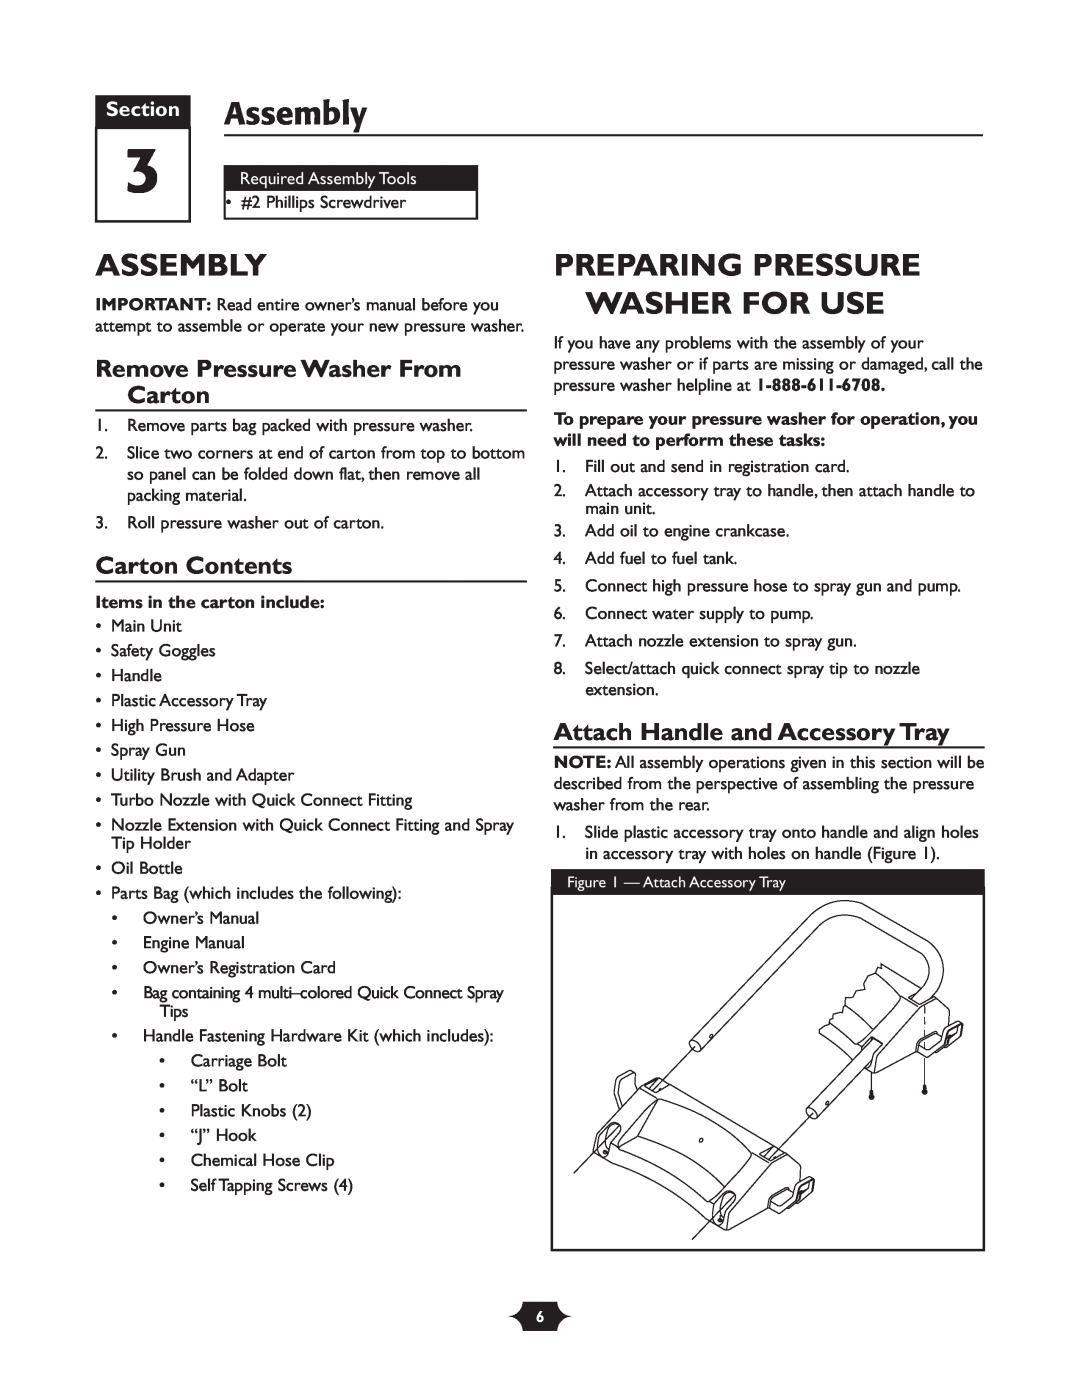 Briggs & Stratton 20209 Assembly, Preparing Pressure Washer For Use, Remove Pressure Washer From Carton, Carton Contents 